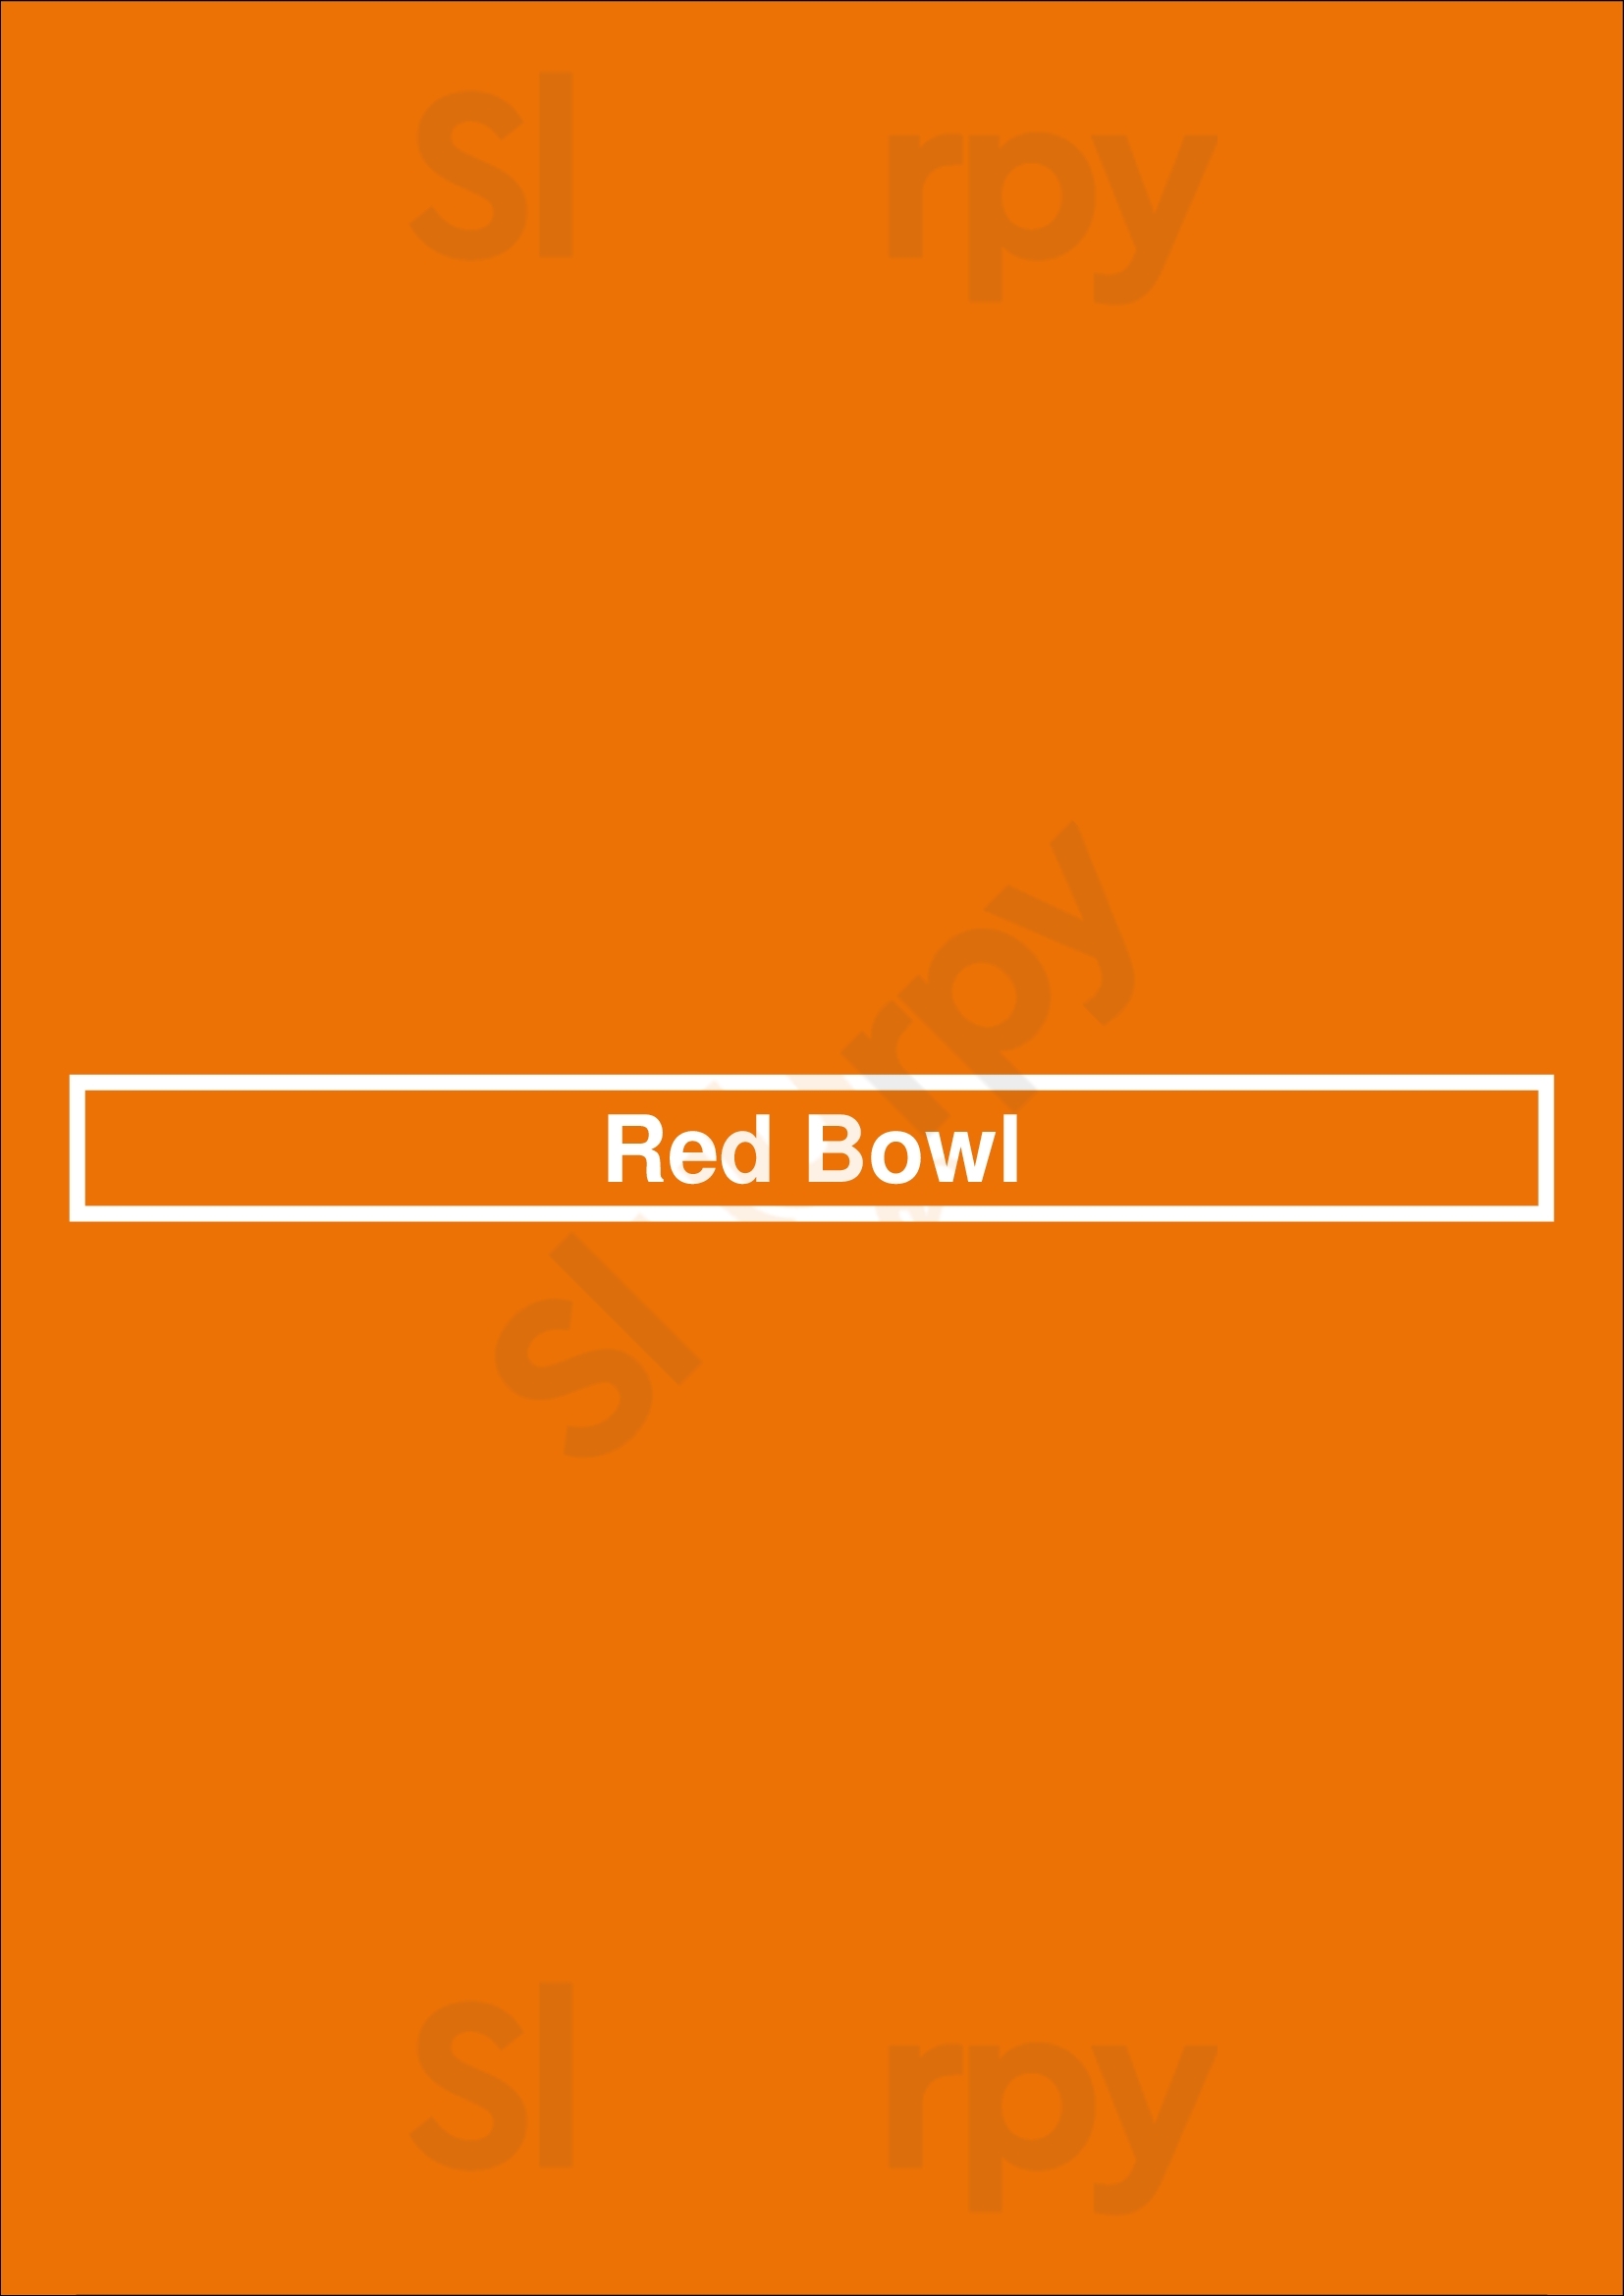 Red Bowl Greenwood Menu - 1